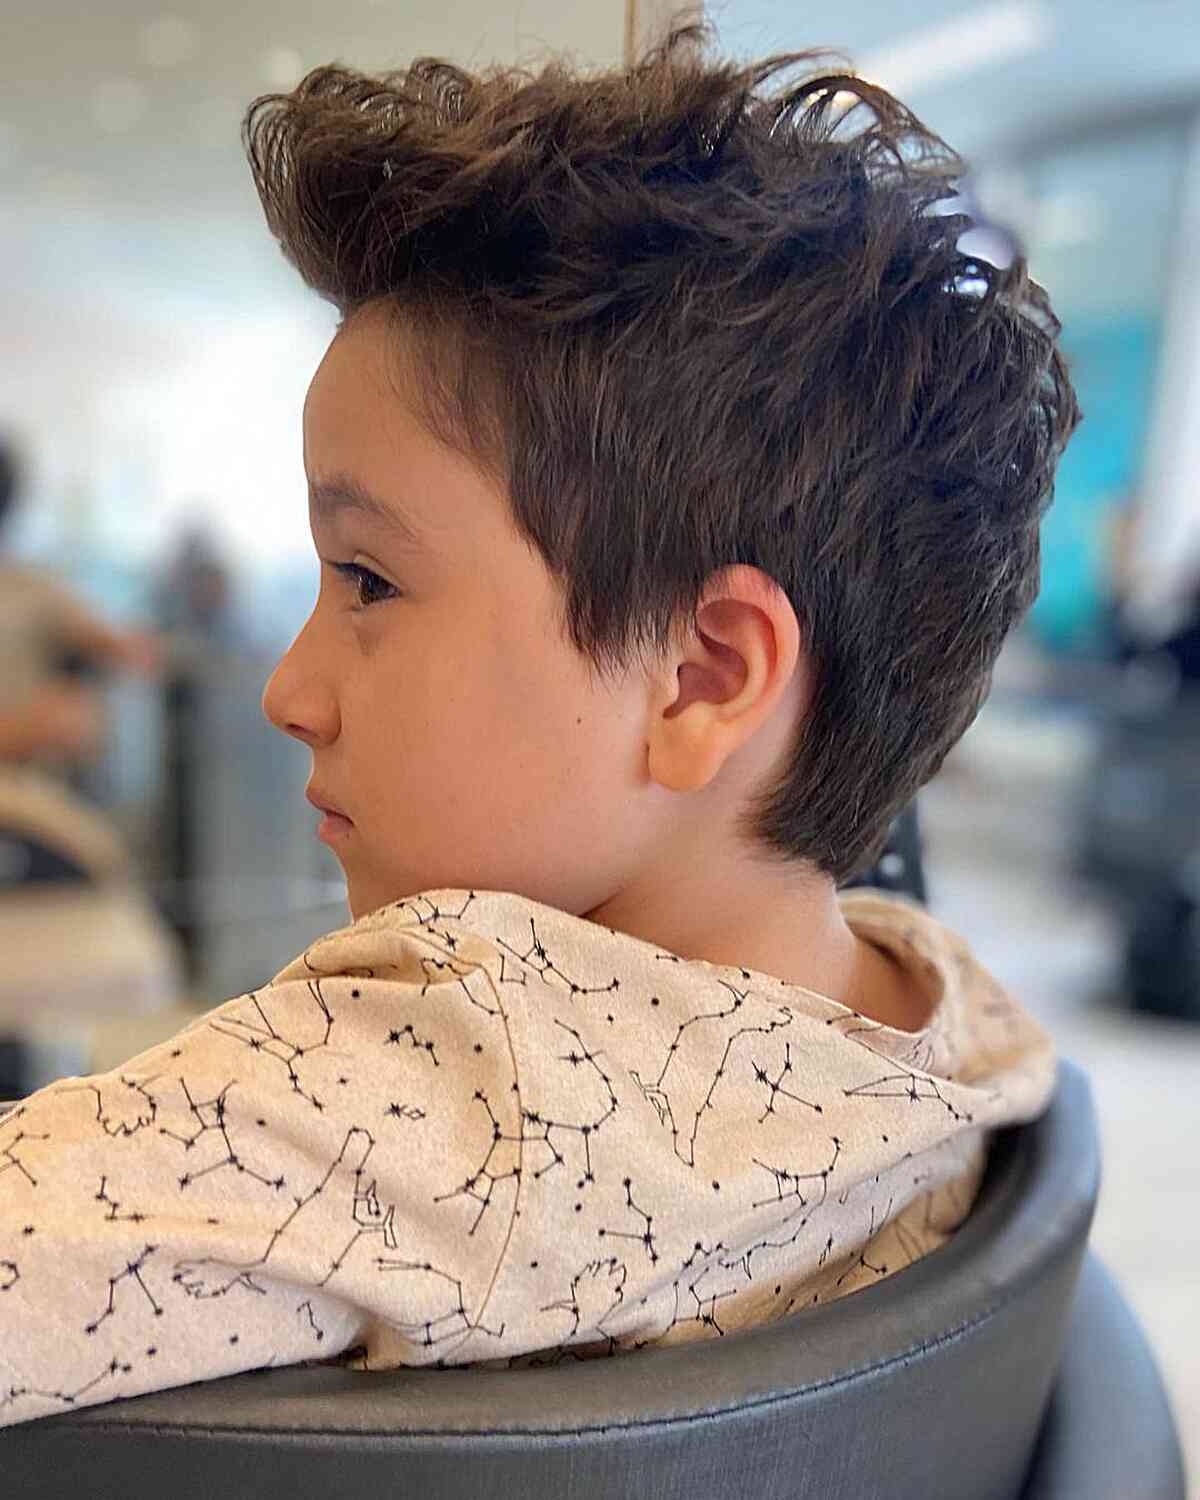 Cute Textured Haircut for Boys with Longer Hair